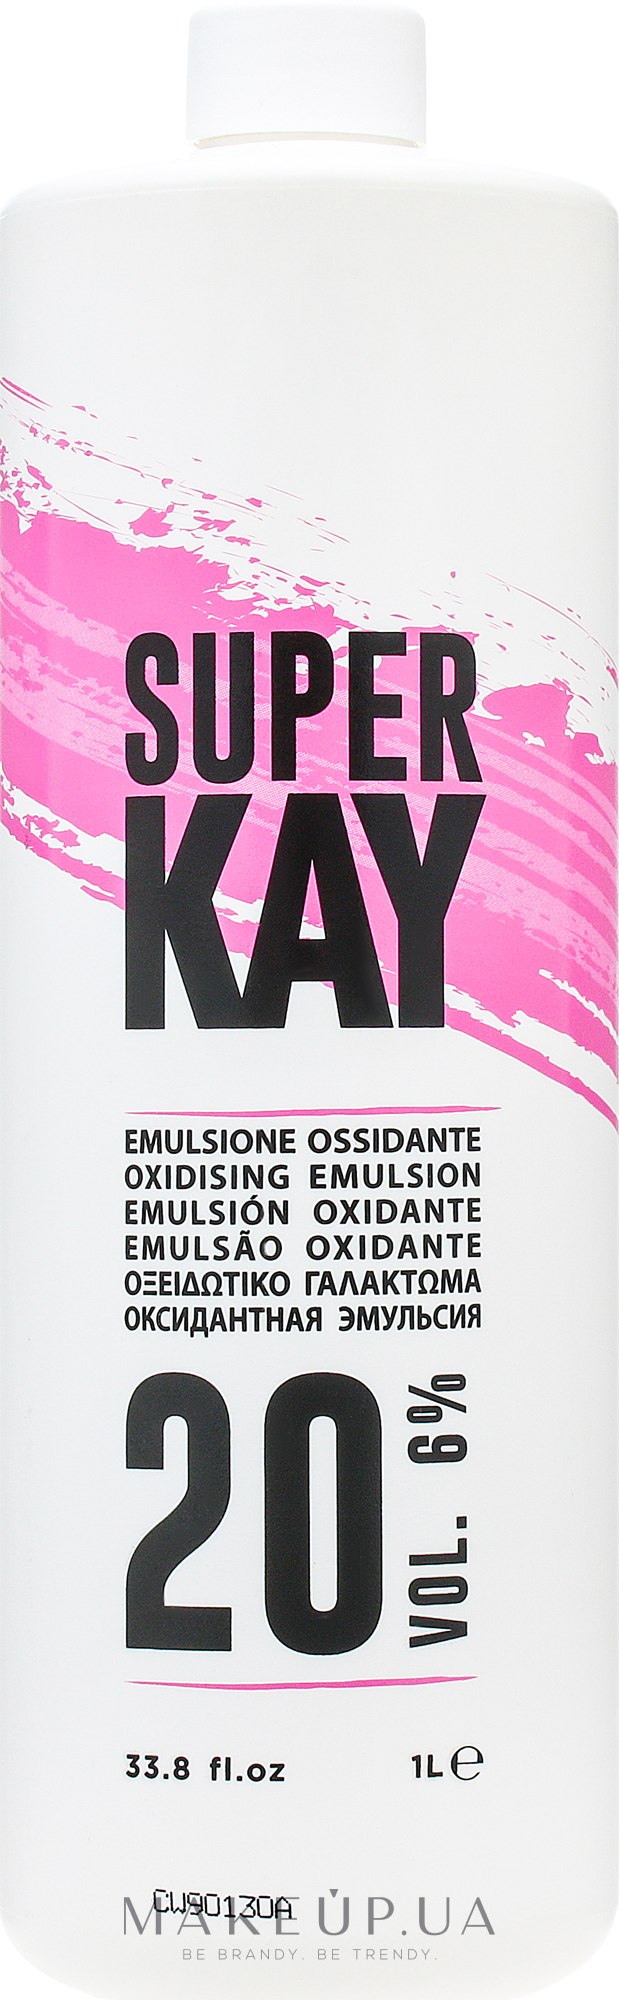 Оксидантная эмульсия 20 Vol.6 % - KayPro Super Kay Oxidising Emulsion  — фото 1000ml